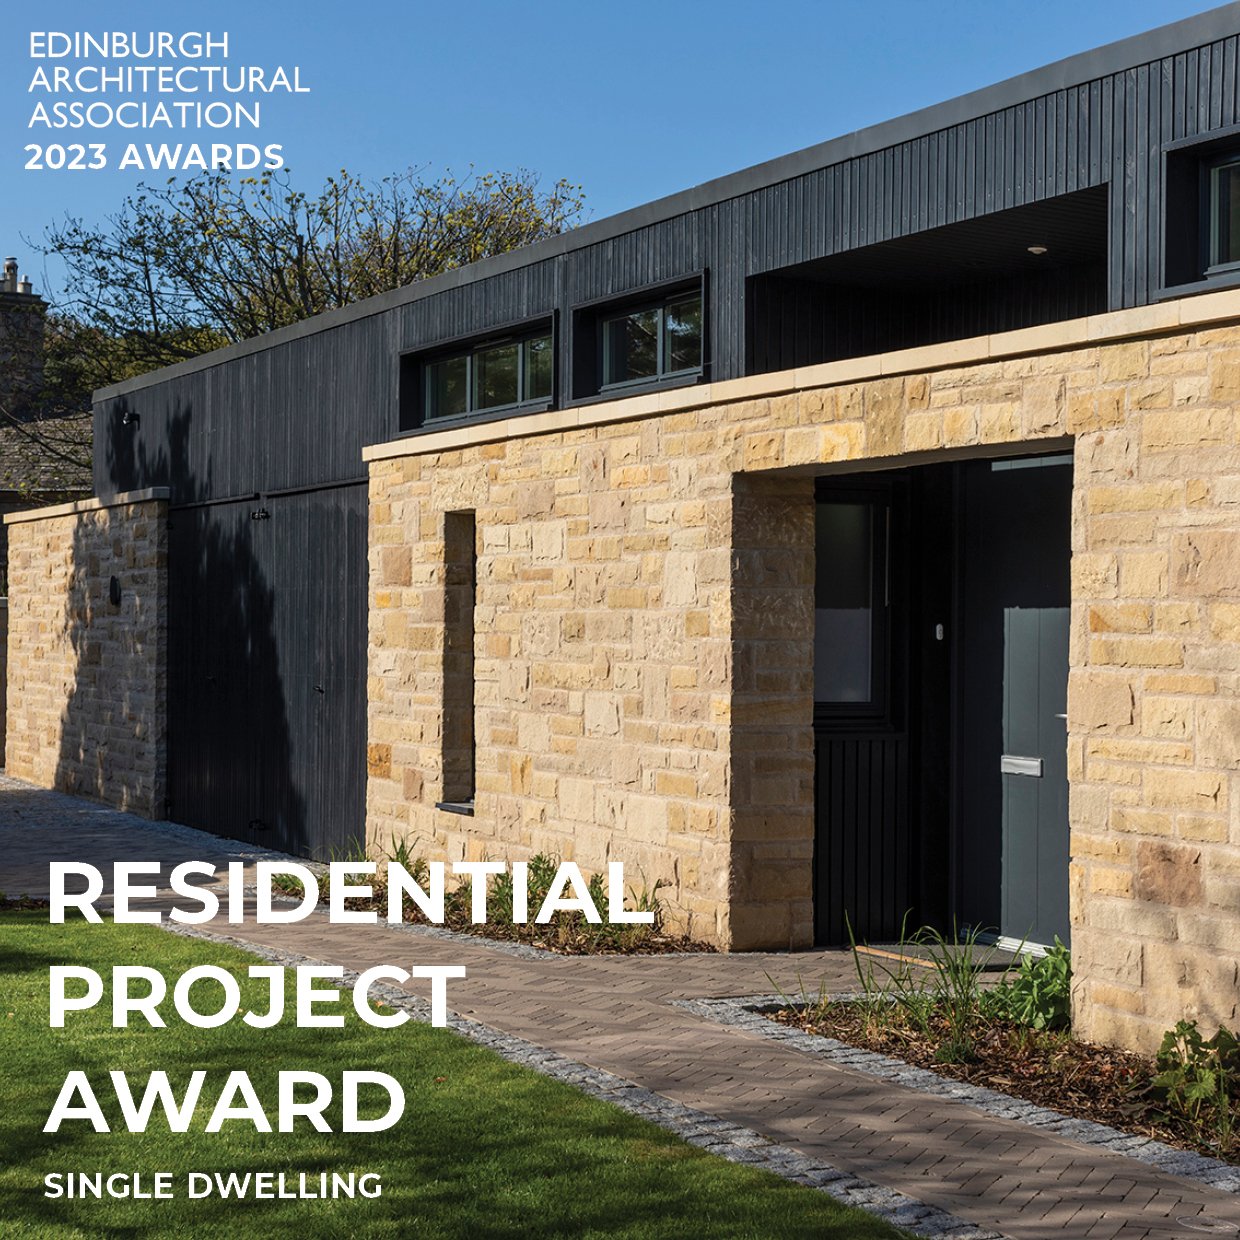 EAA-edinburgh-architectural-association-awards-2023-categories-announced5.jpg